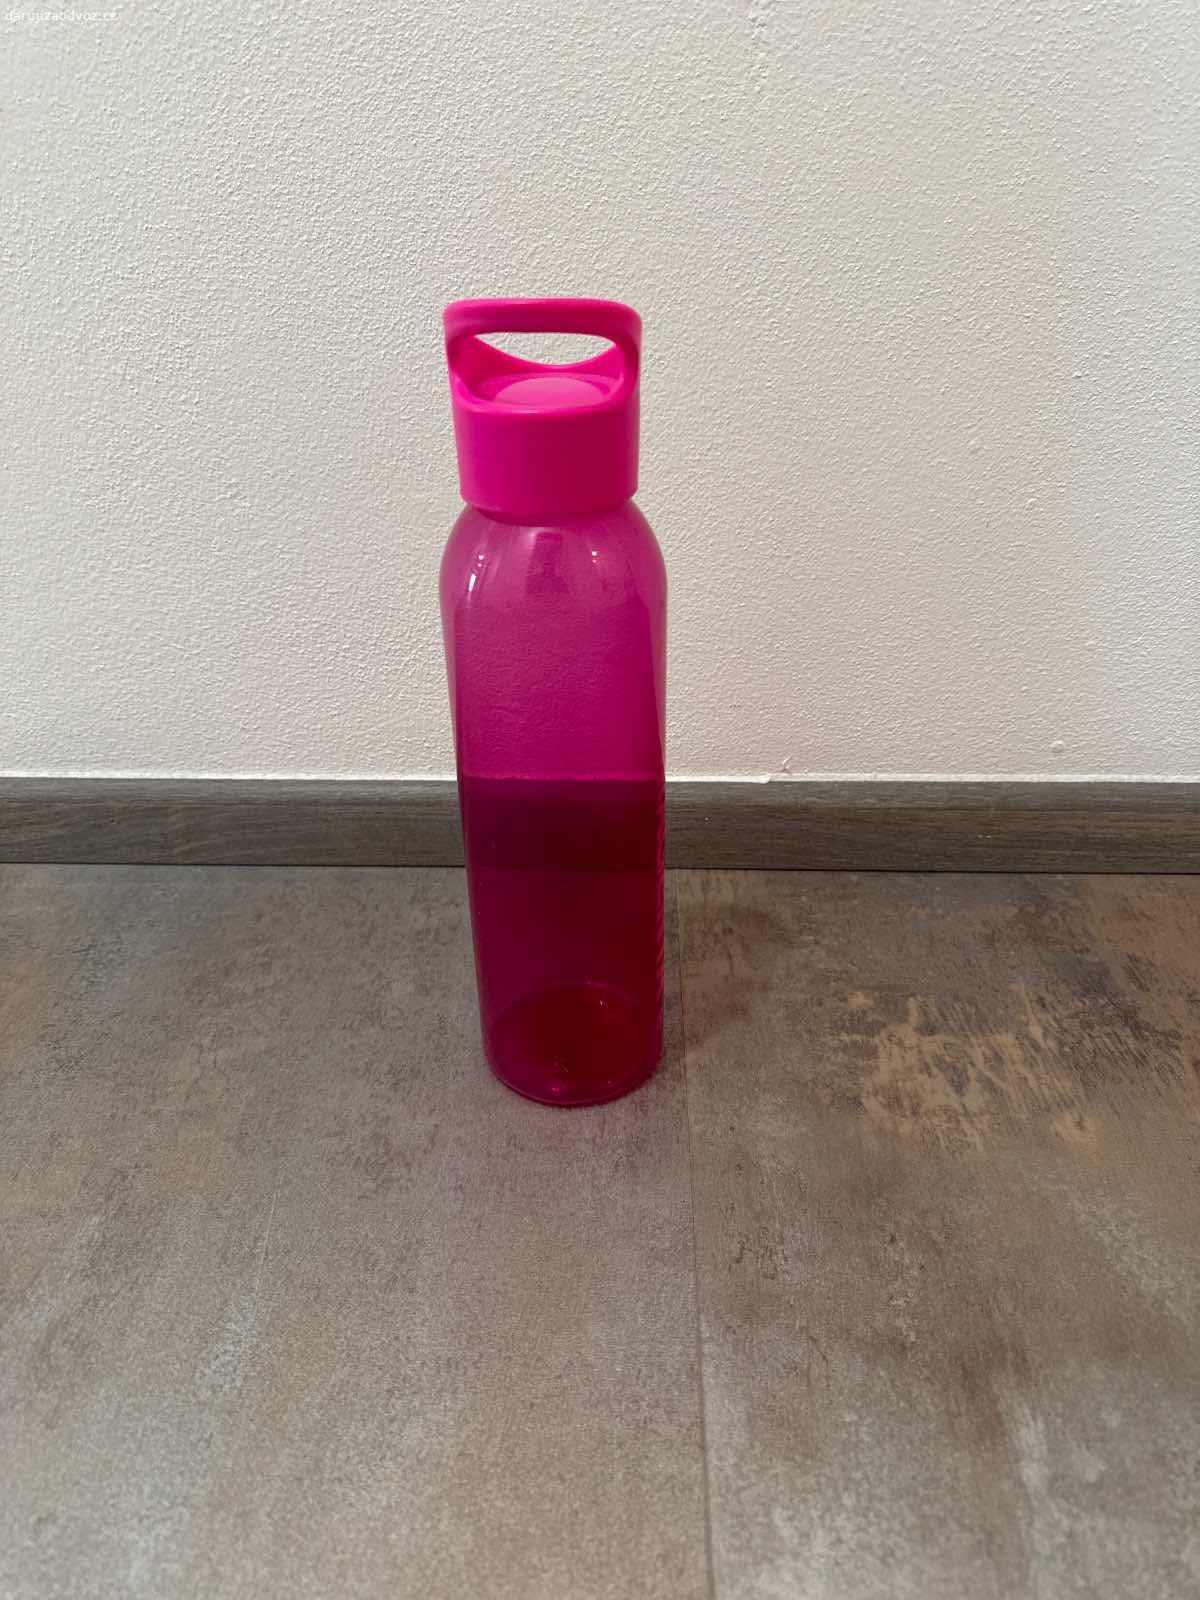 Růžová plastová lahev na vodu. Daruji za odvoz růžovou plastovou láhev na vodu. Poblíž tramvajové zastávky U zvonu.